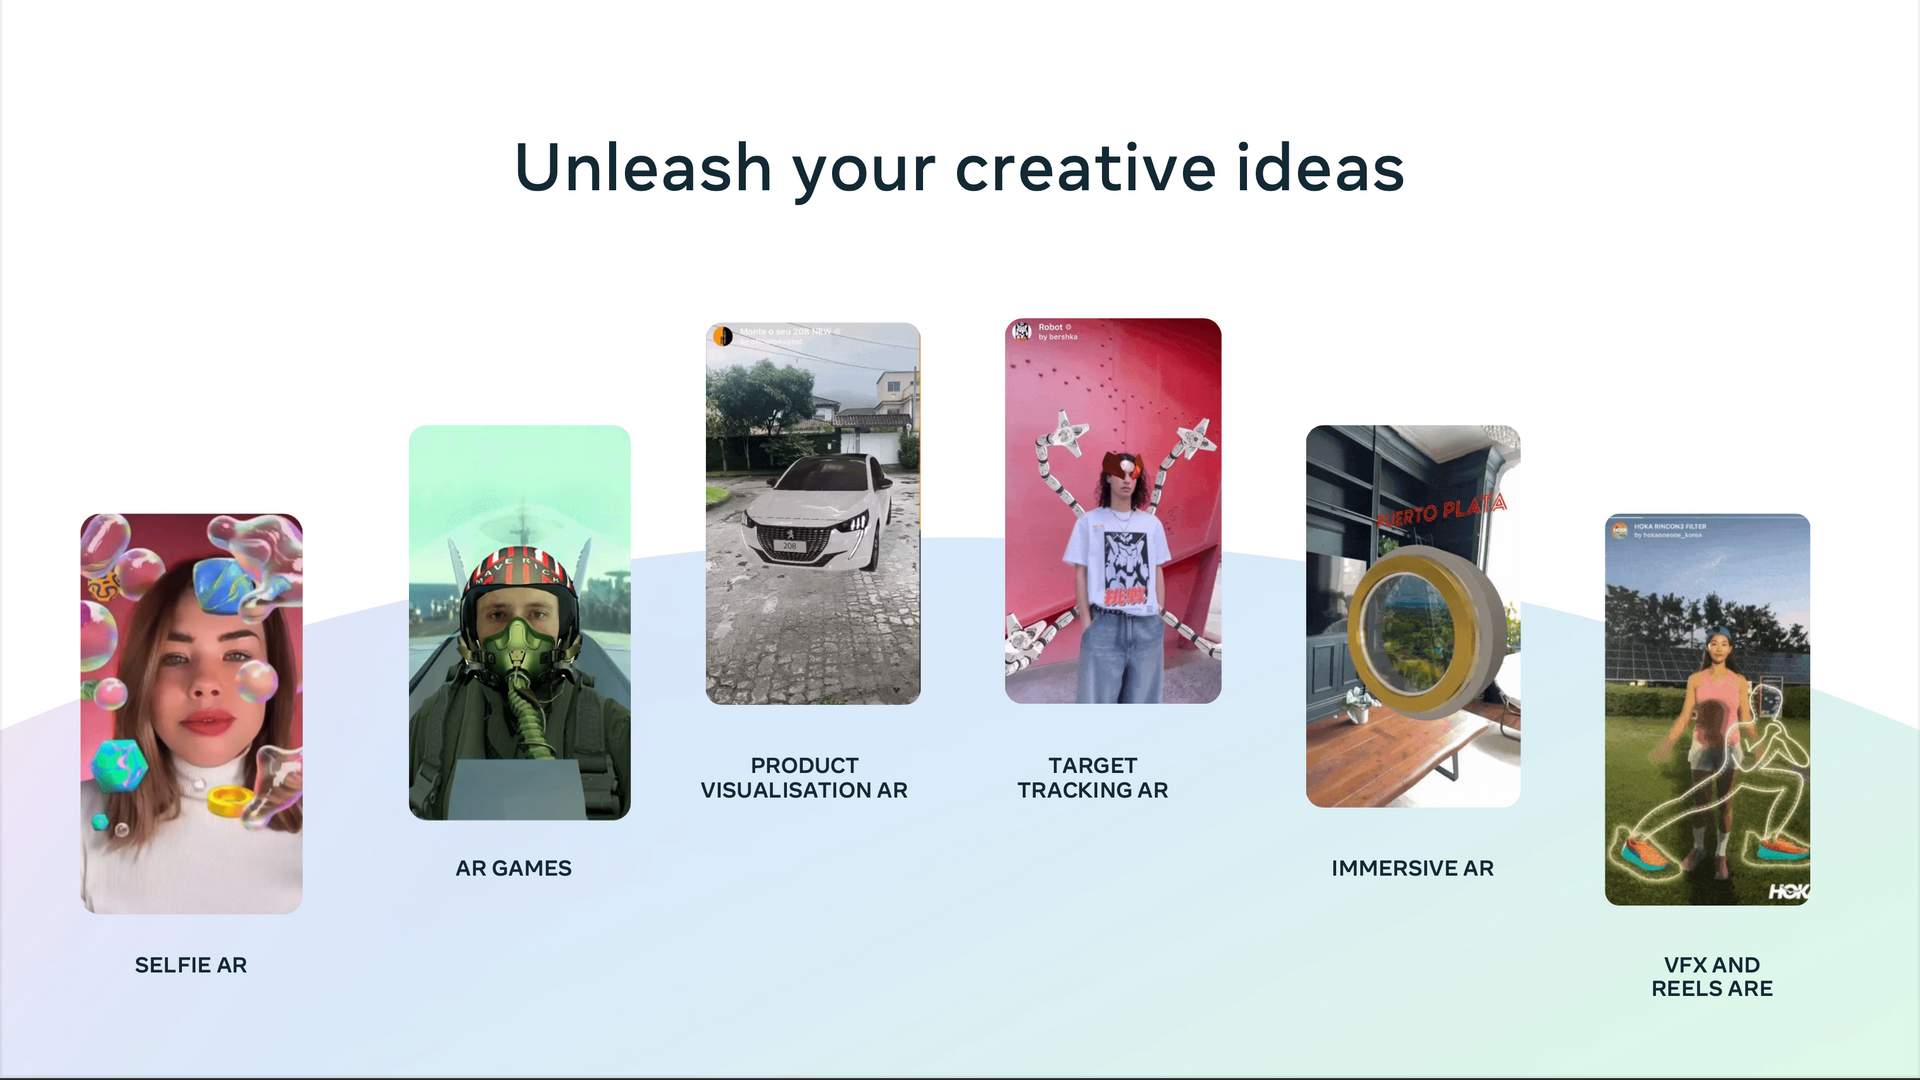 BrandXR's Creative Ideas for Instagram Filters